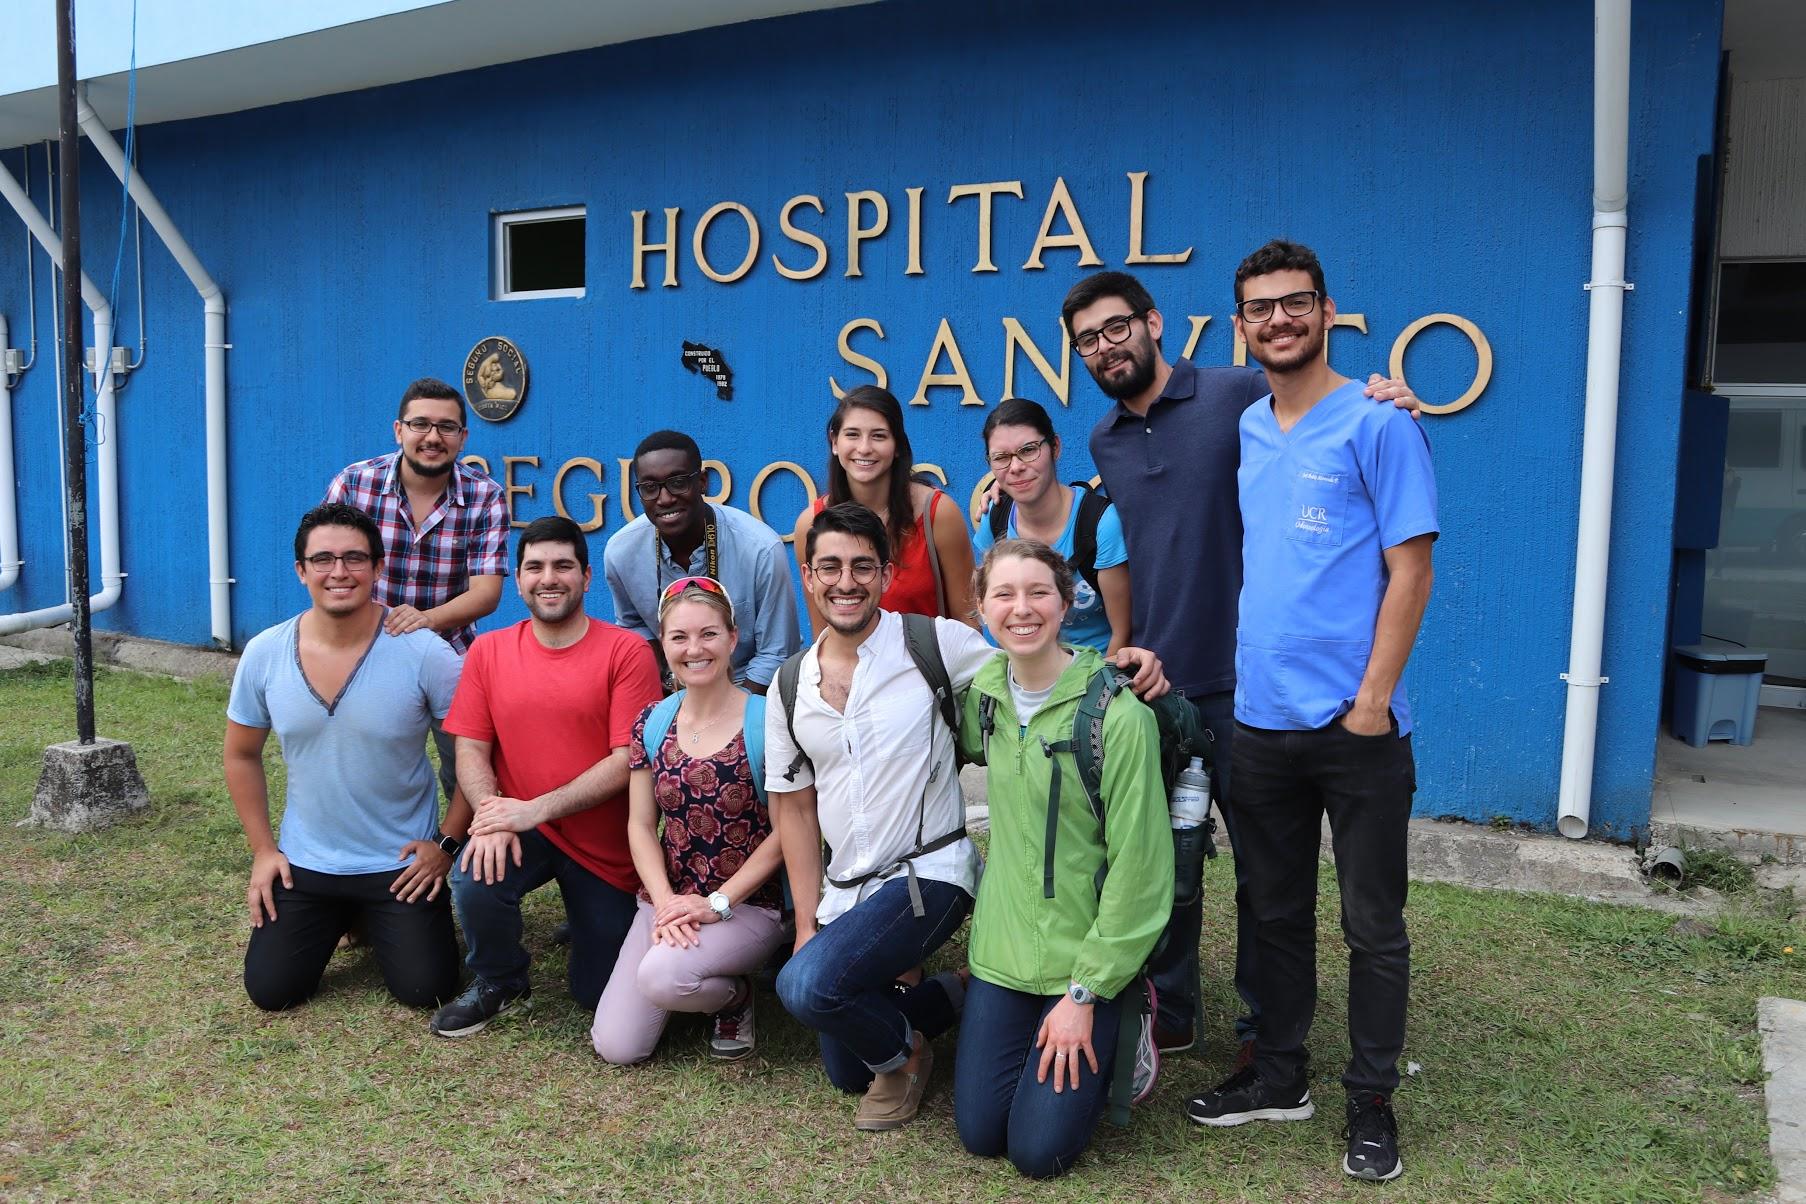 David Danesh, DMD20, on a global health trip to Costa Rica